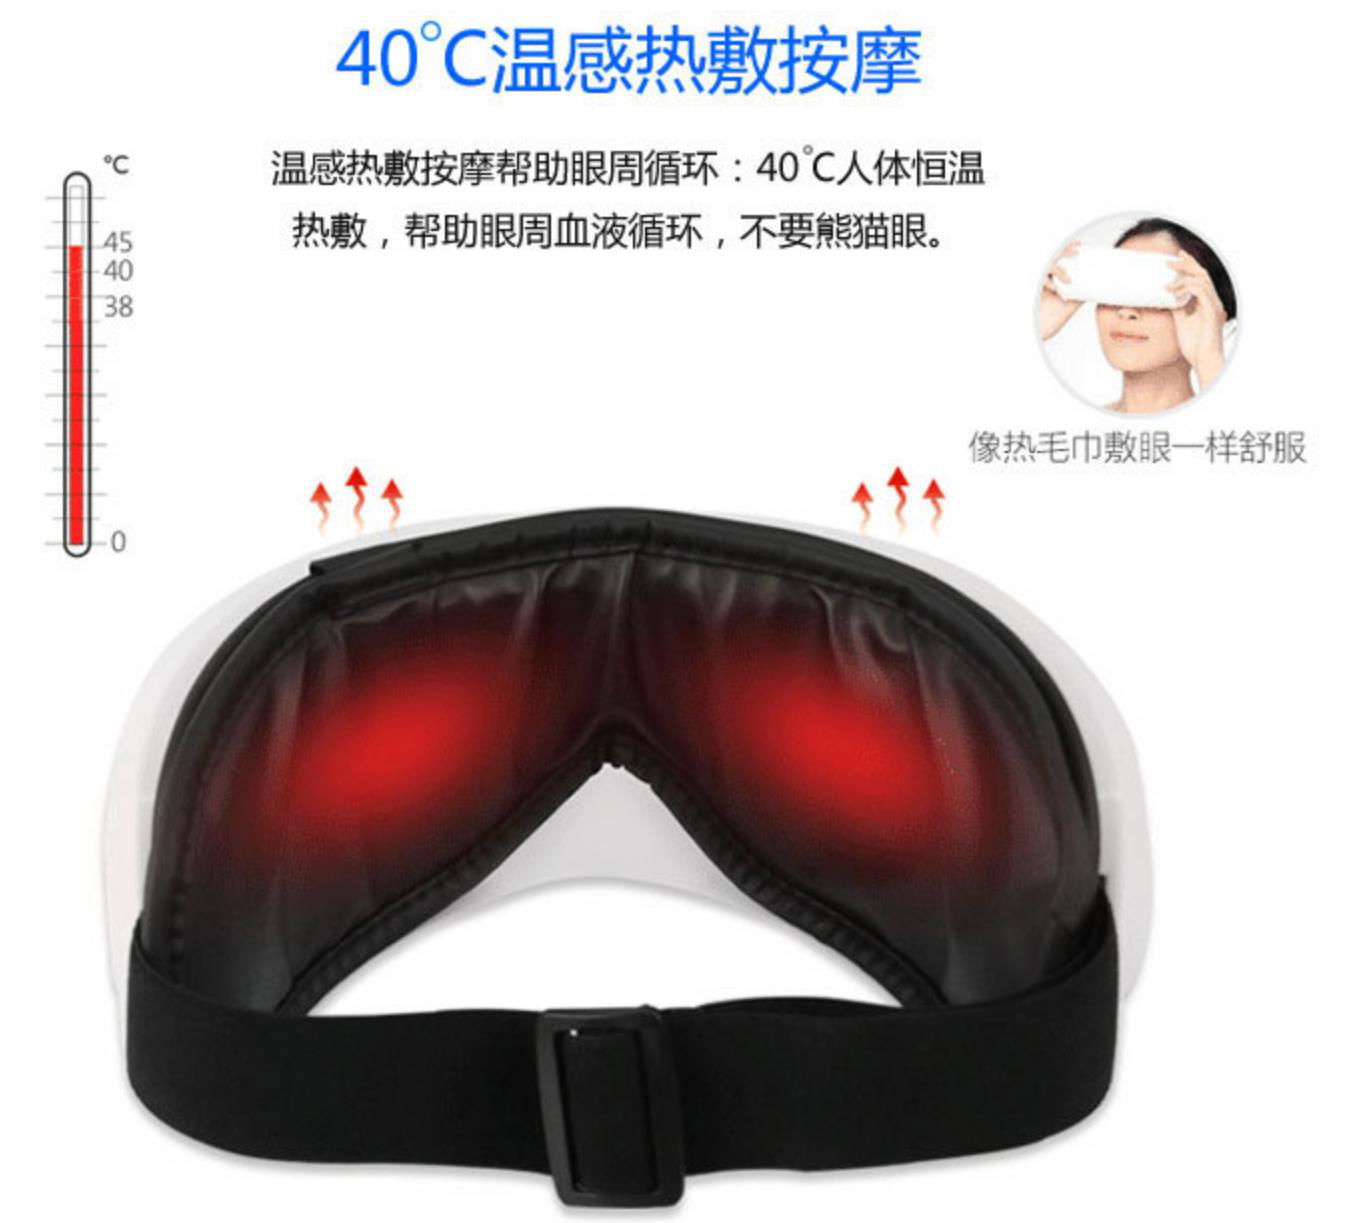 Intelligent charging eye protector for children 2